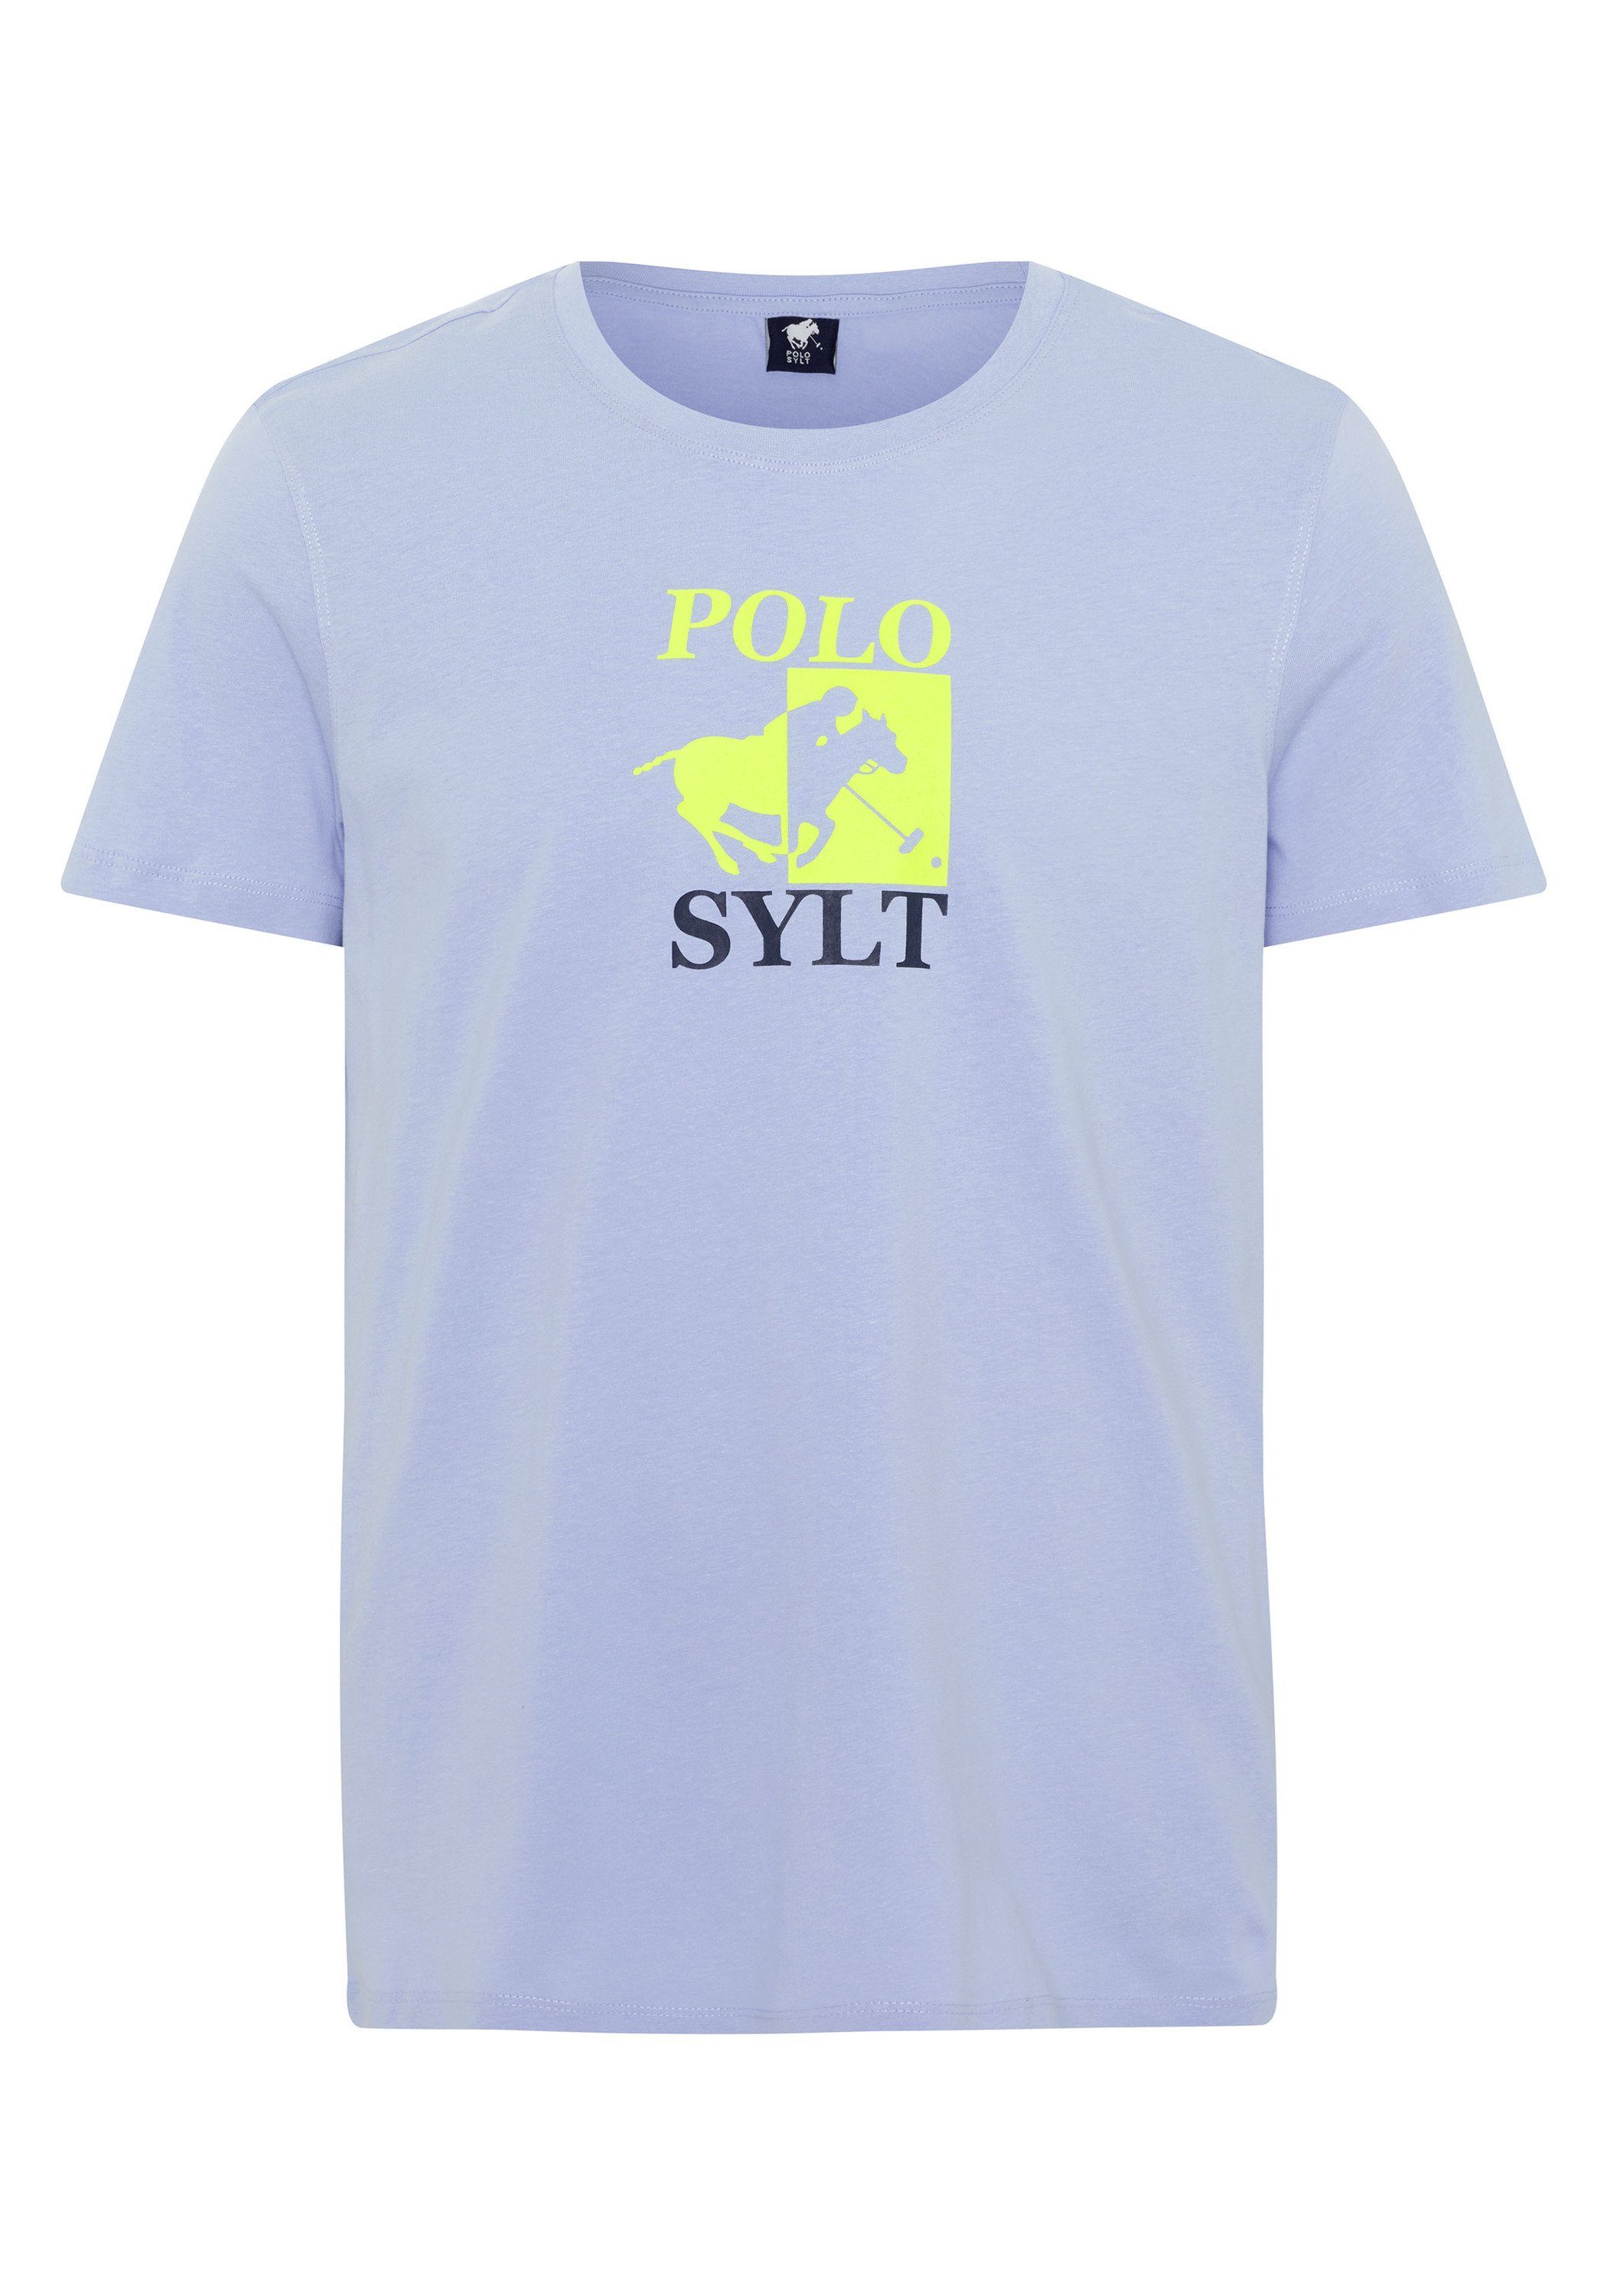 Polo Sylt Print-Shirt mit 16-3922 Brunnera Blue Logoprint großem